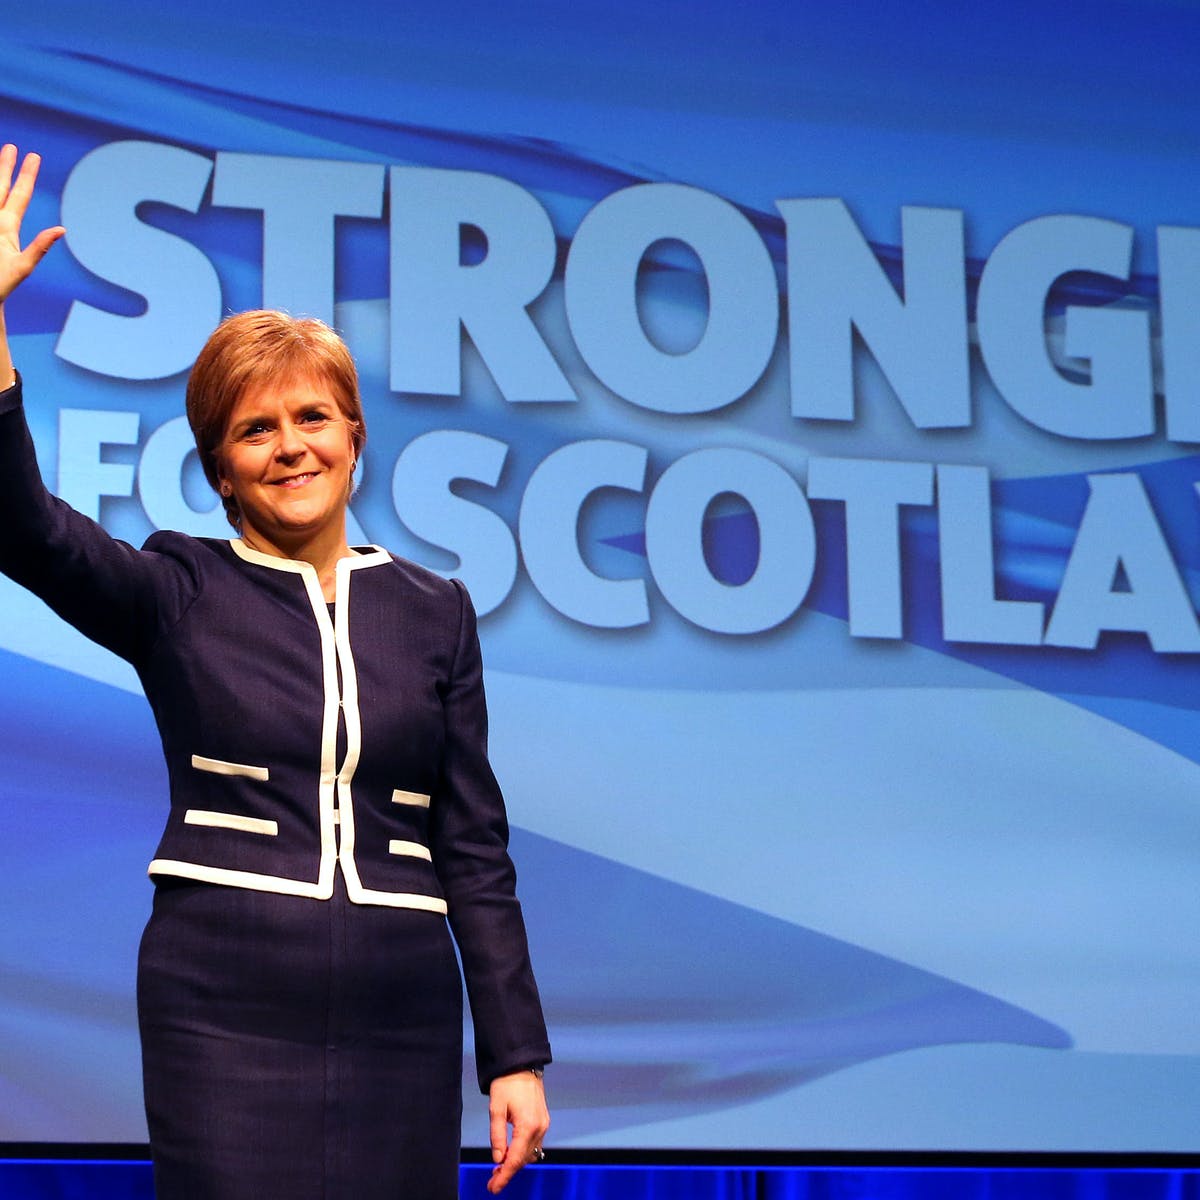 Hands up if you think Nicola Sturgeon is doing a great job for Scotland 🙌🙌🙌🏴󠁧󠁢󠁳󠁣󠁴󠁿🏴󠁧󠁢󠁳󠁣󠁴󠁿 @NicolaSturgeon